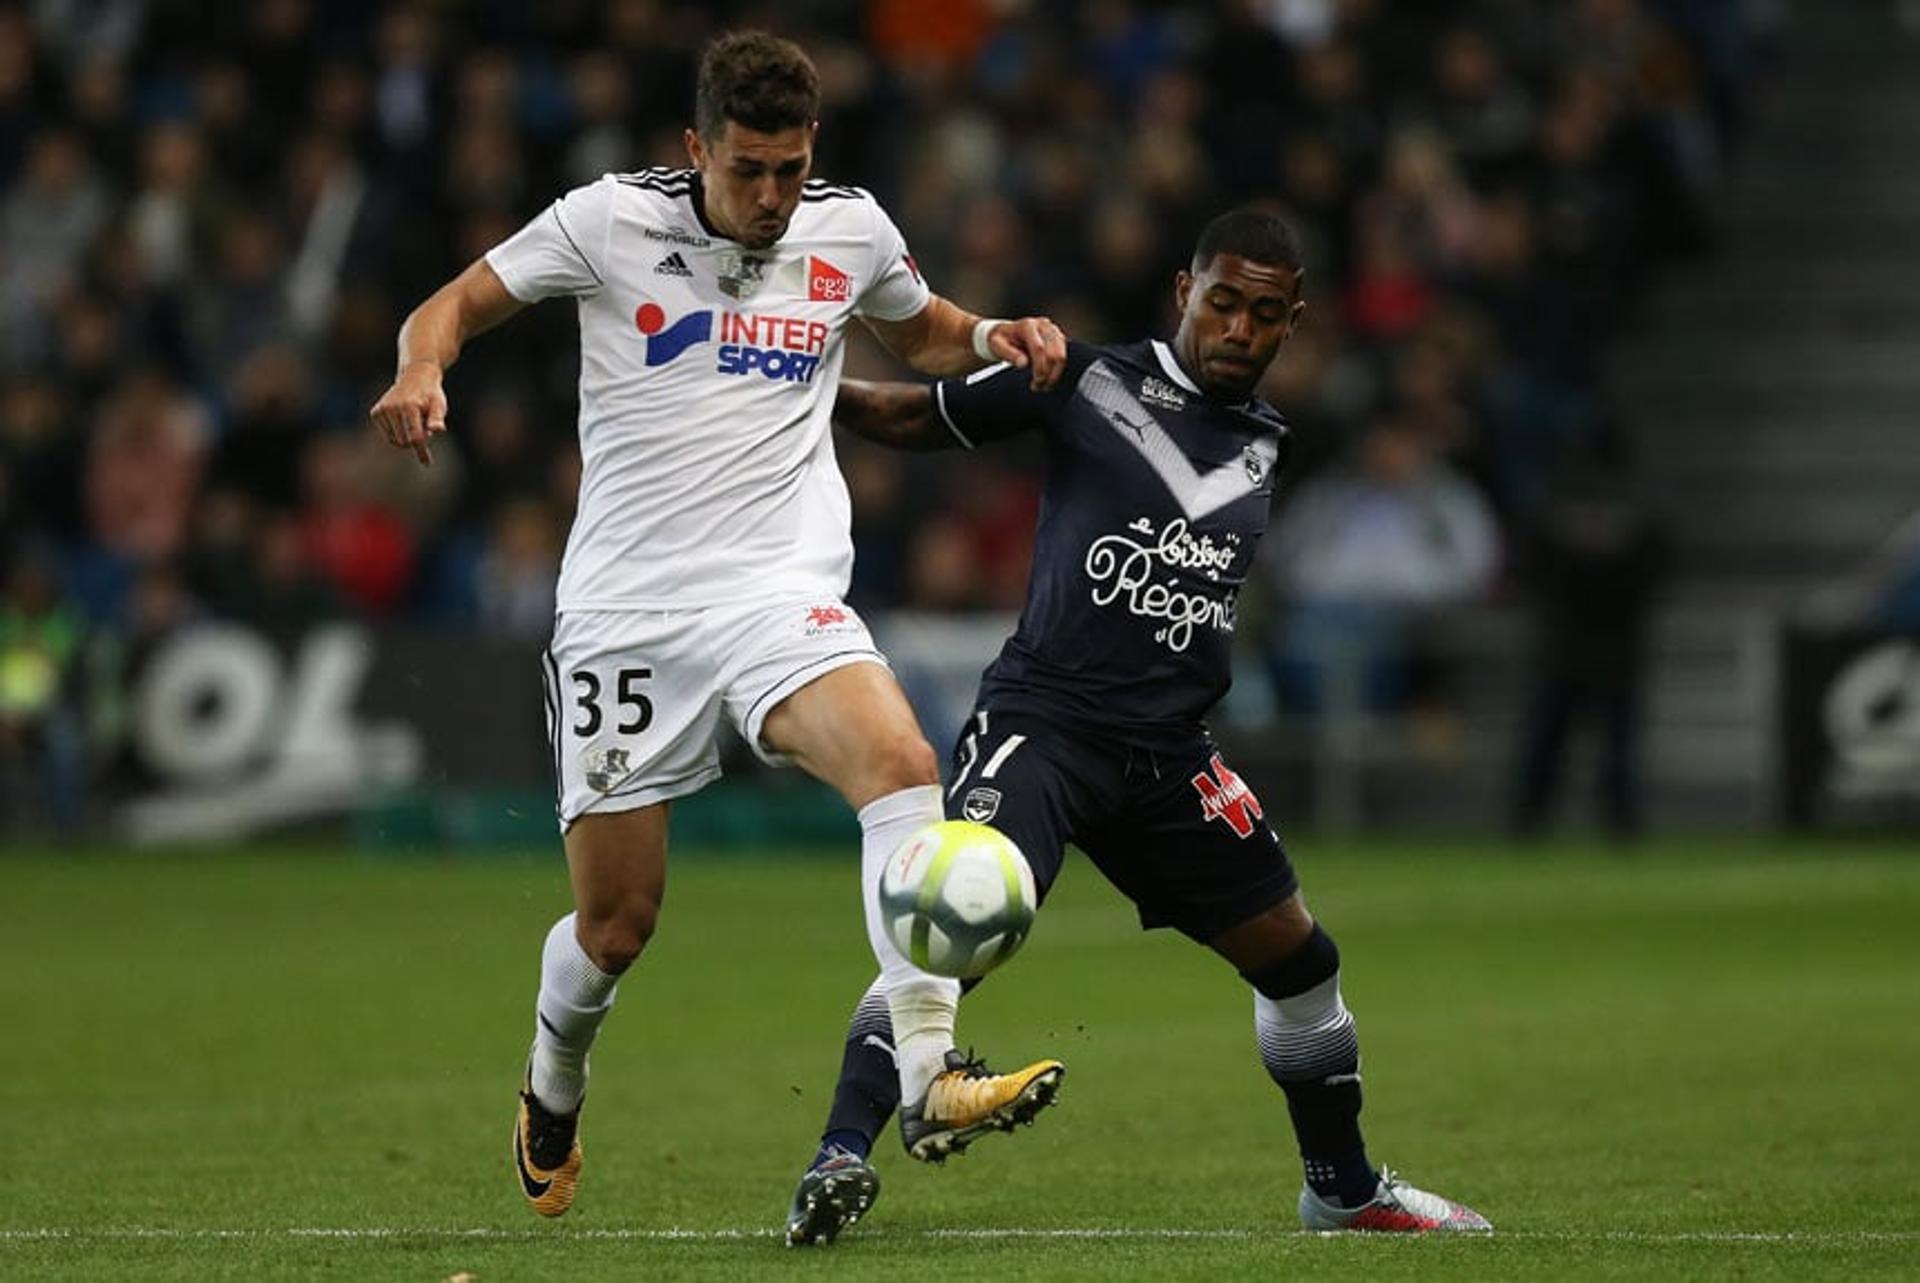 Danilo Avelar (Amiens) - O zagueiro brasileiro evitou que o Amiens saísse derrotado para o Montpellier. Danilo deixou a sua marca já nos últimos minutos, deixando tudo igual, fora de casa: 1 a 1.